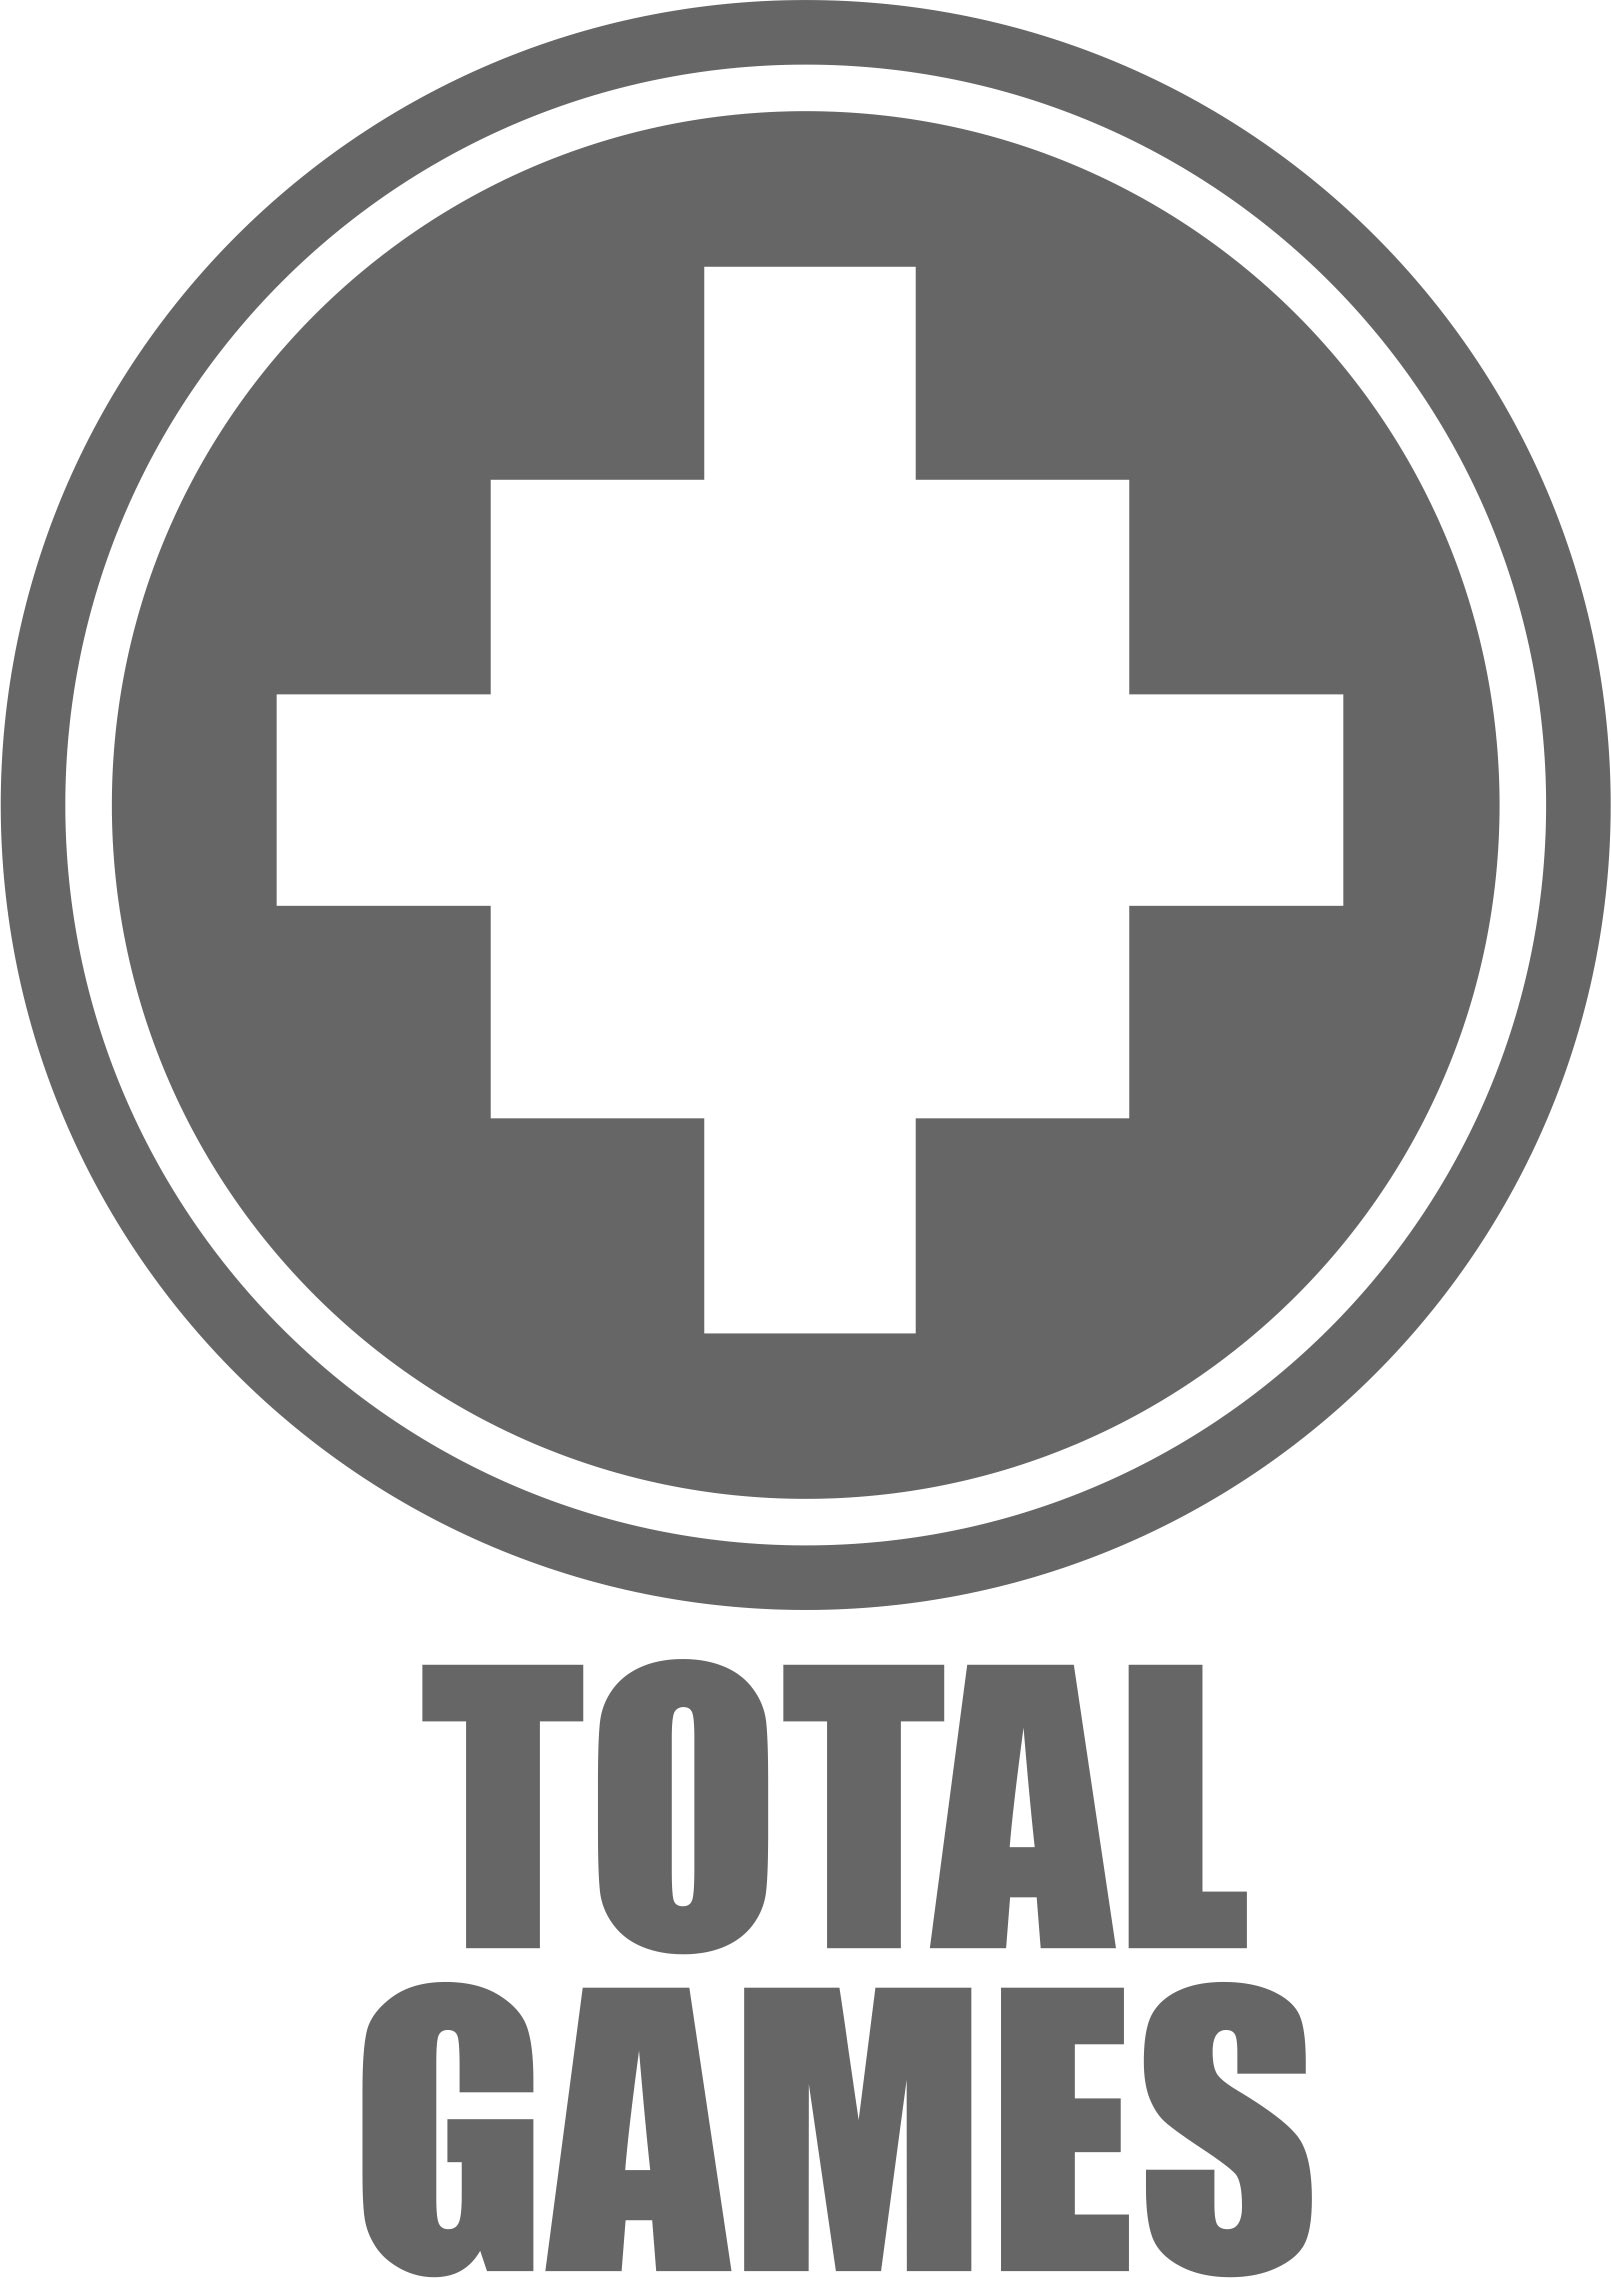 Логотип компании «Total Games»